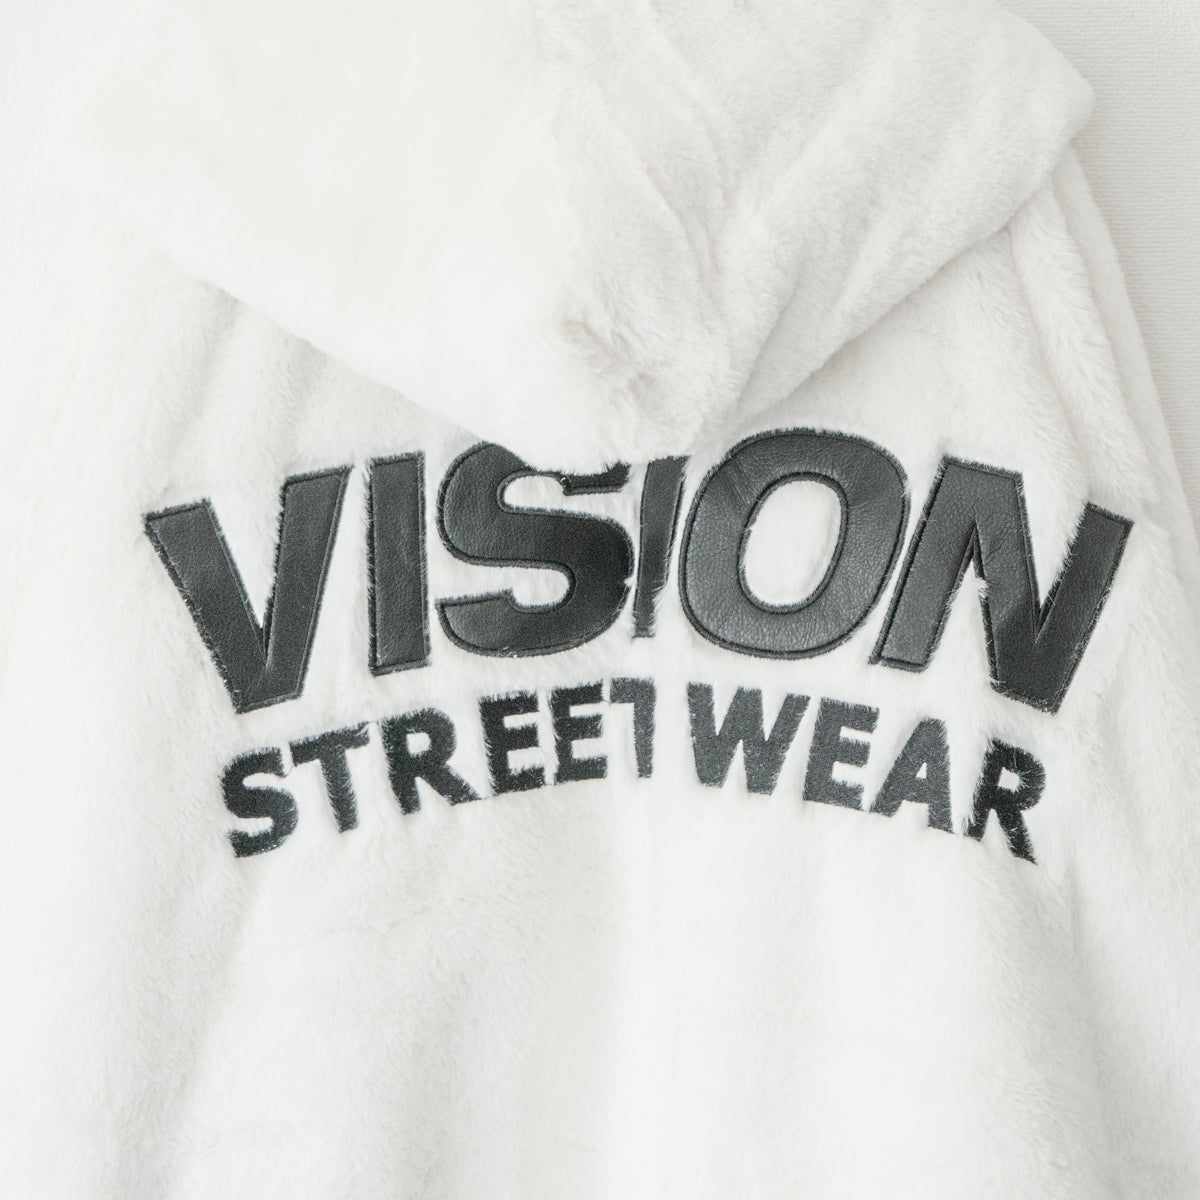 VISION STREET WEAR フードファーブルゾン BLACK